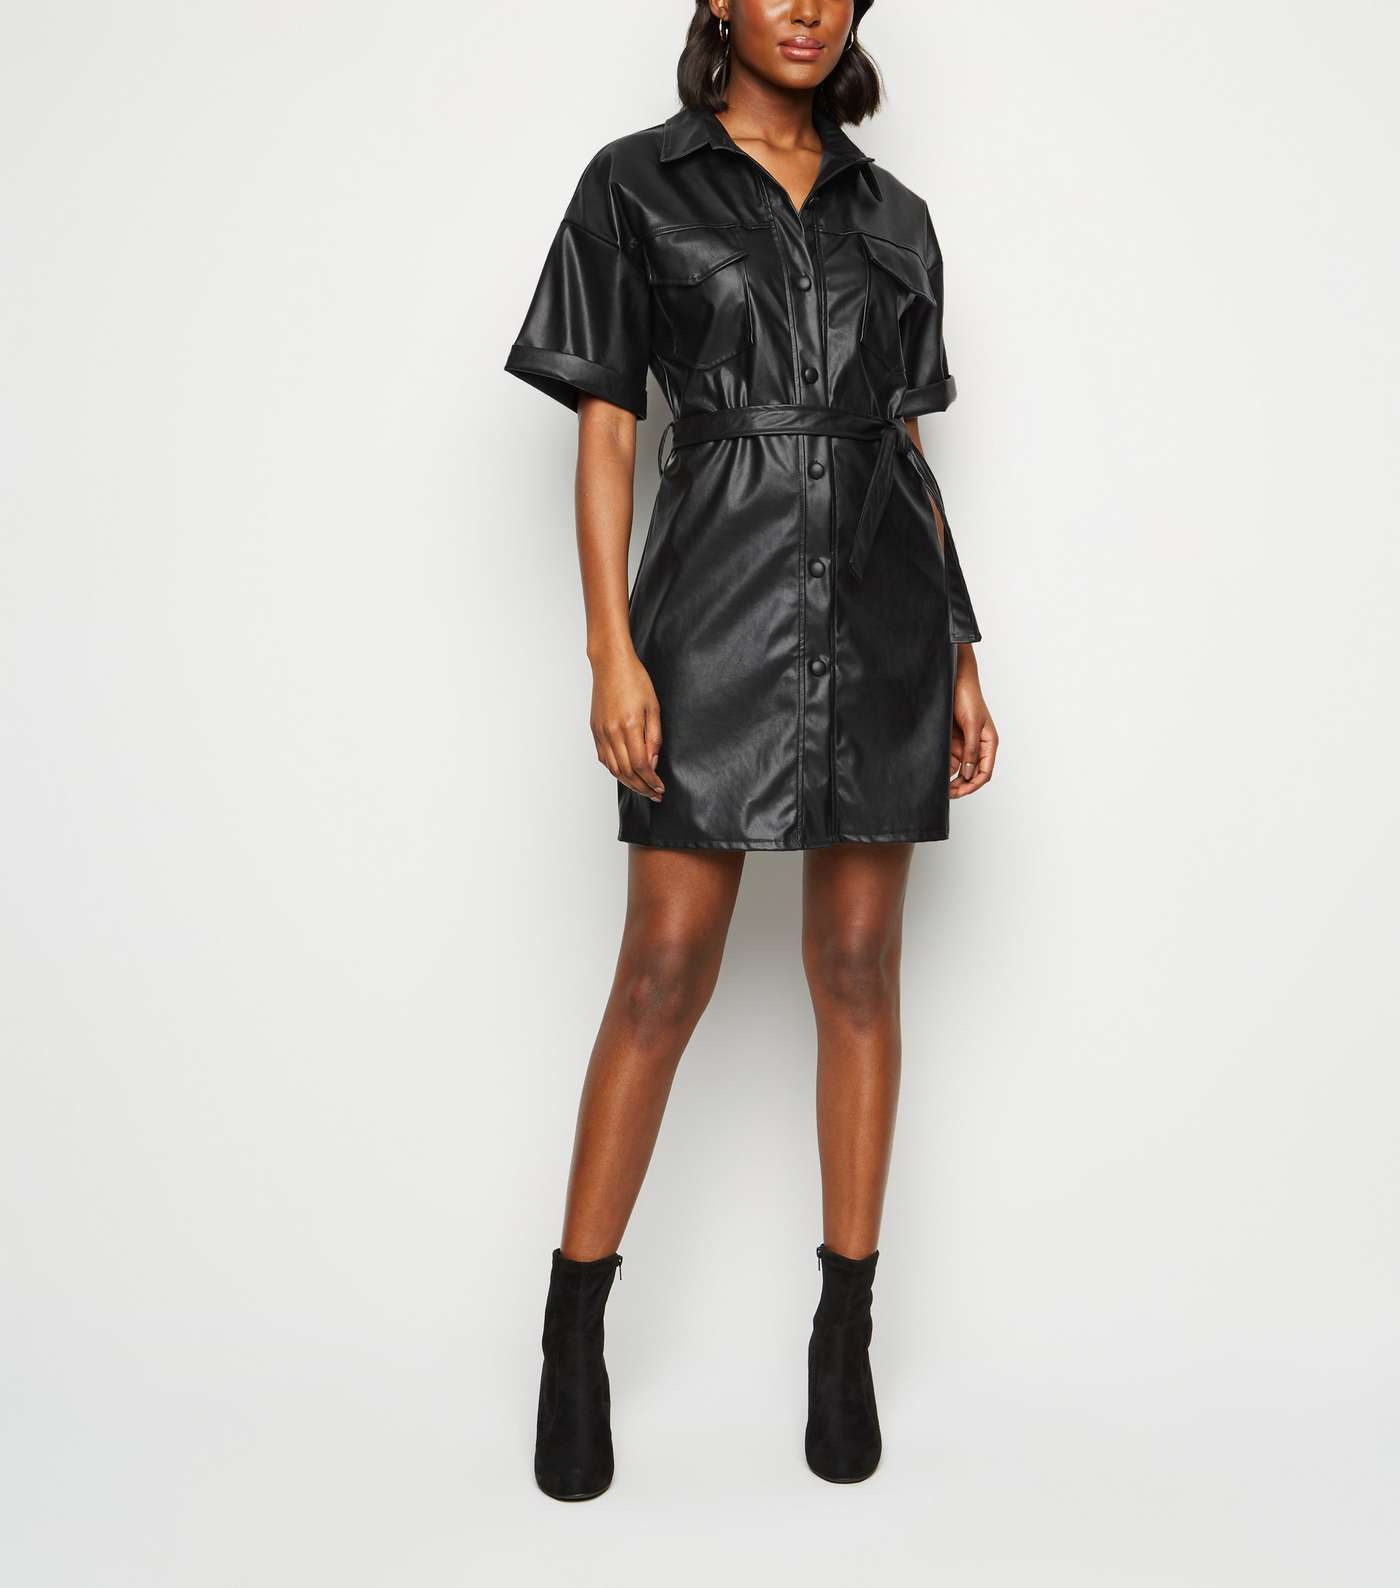 Cameo Rose Black Leather-Look Utility Shirt Dress Image 2